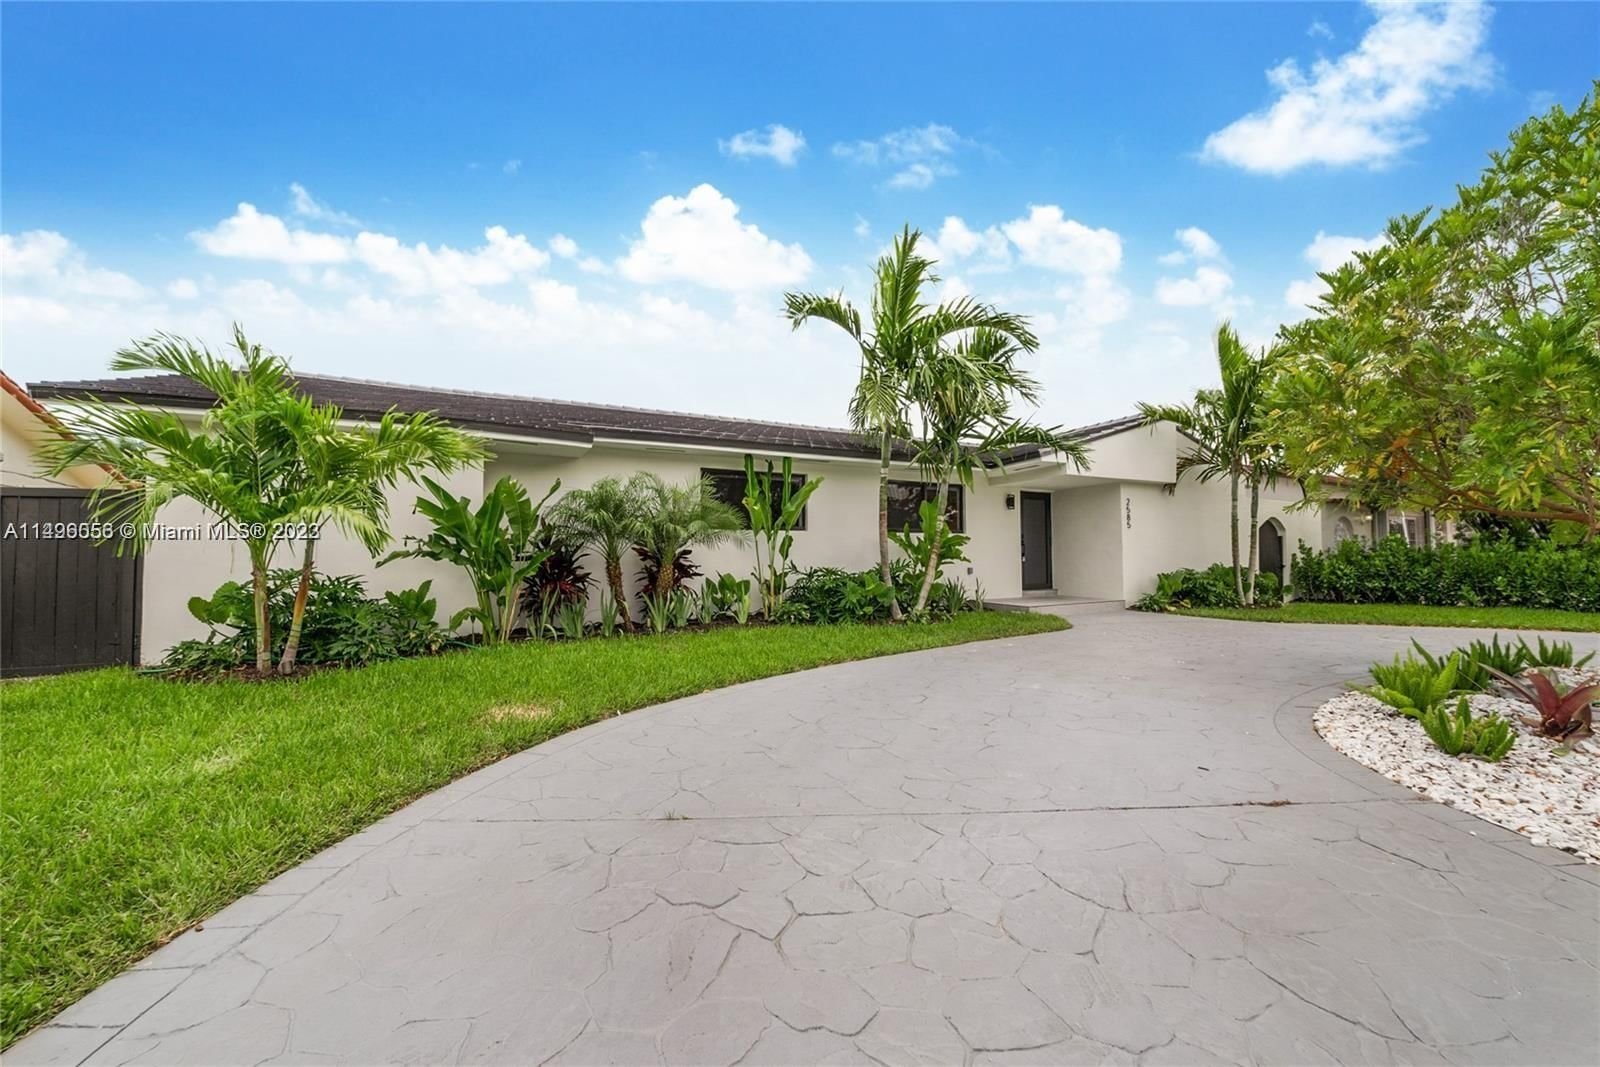 Real estate property located at 2585 108th Ave, Miami-Dade County, P & A SUB, Miami, FL